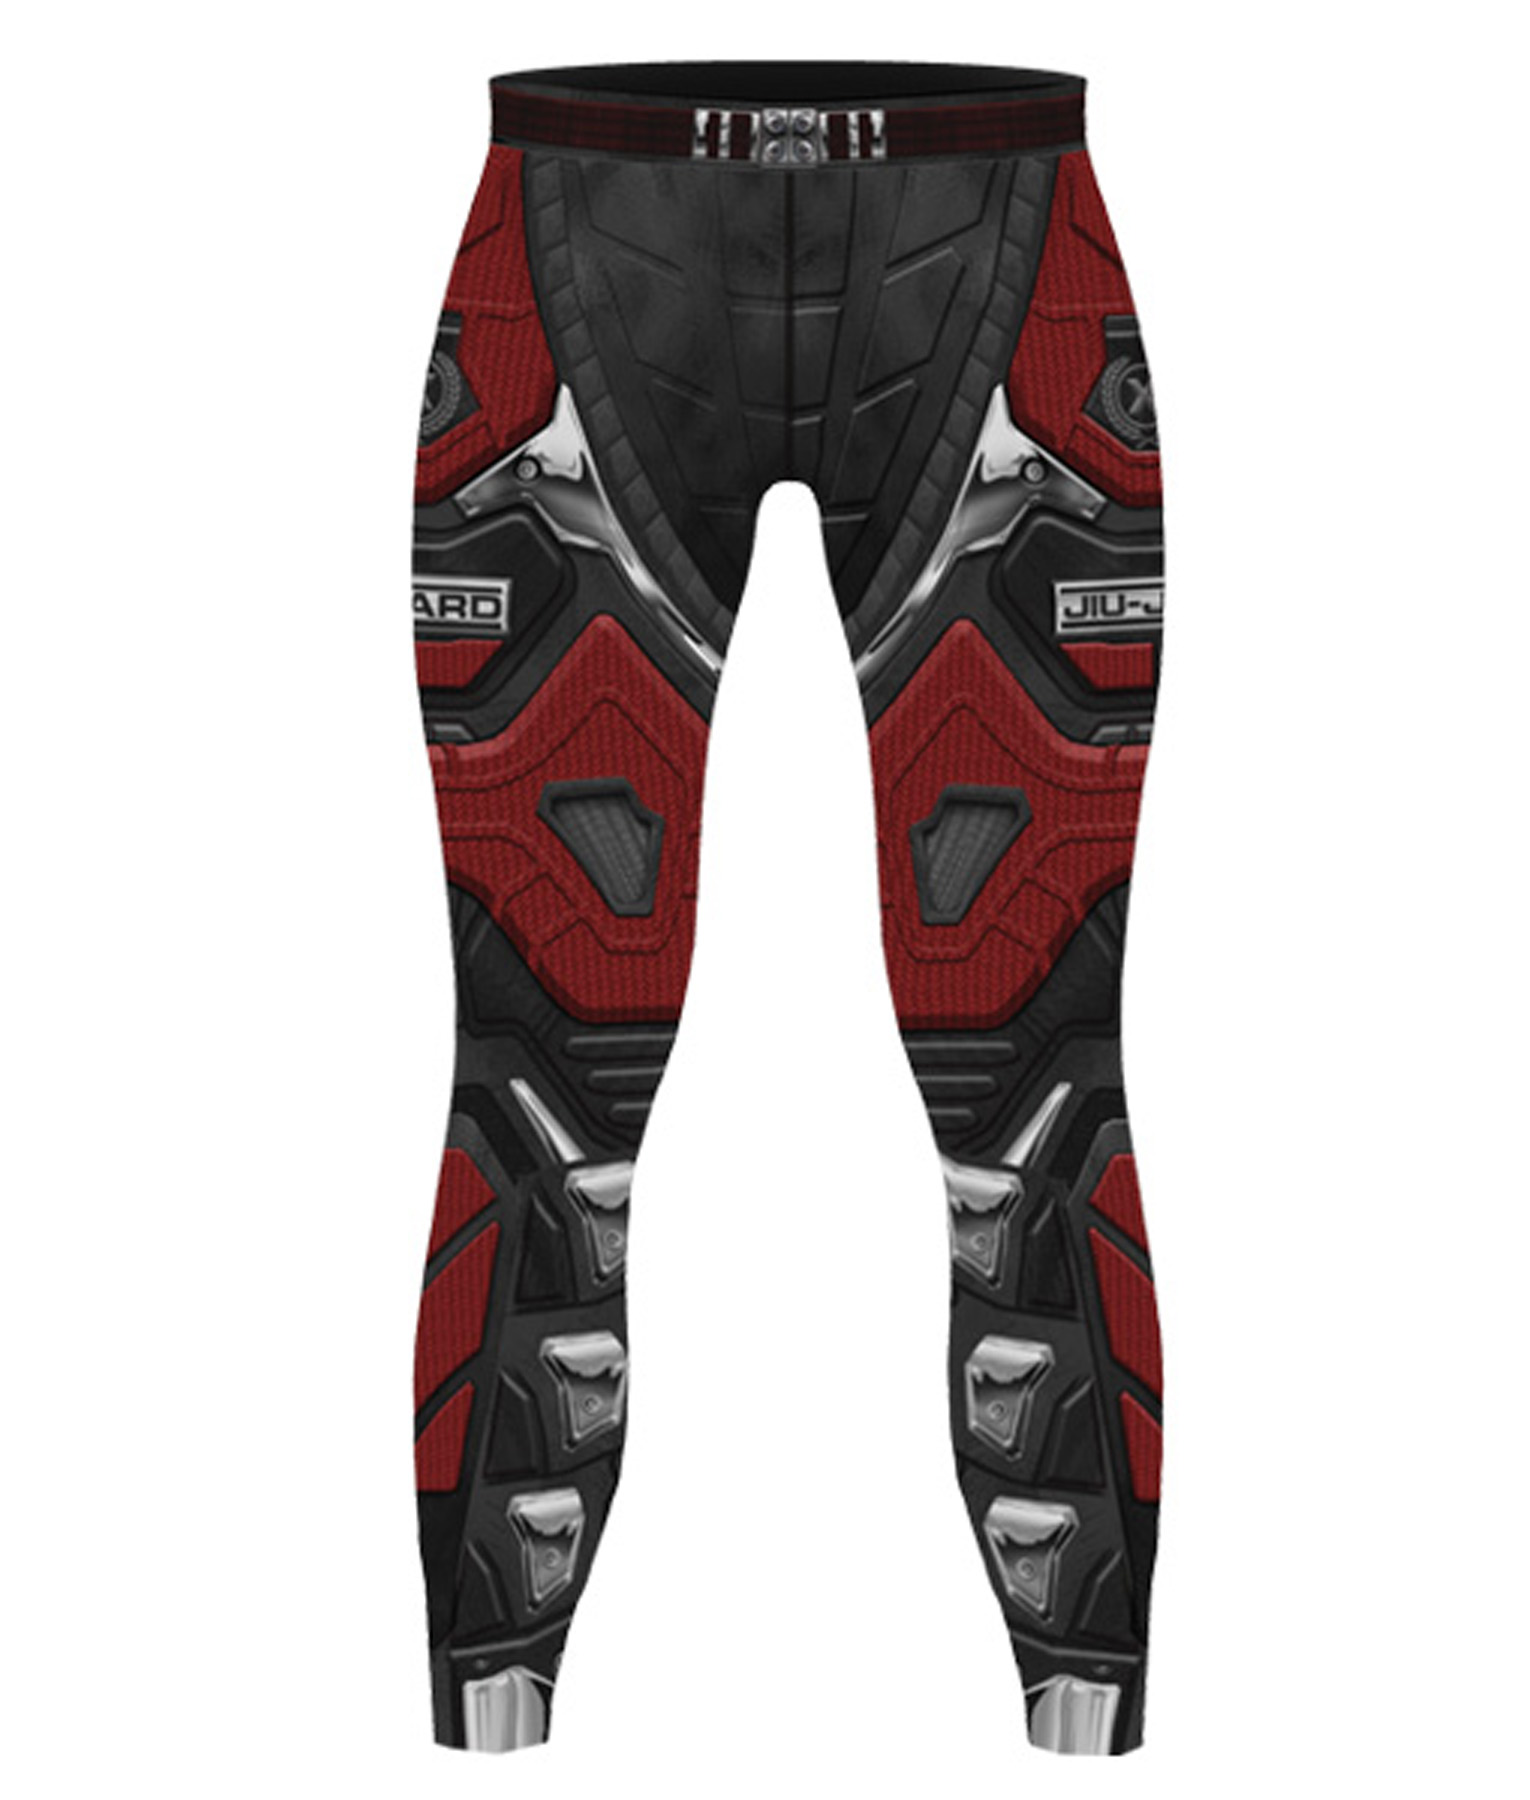 Harley Compression Pants – X-Guard Brand: Brazilian Jiu Jitsu